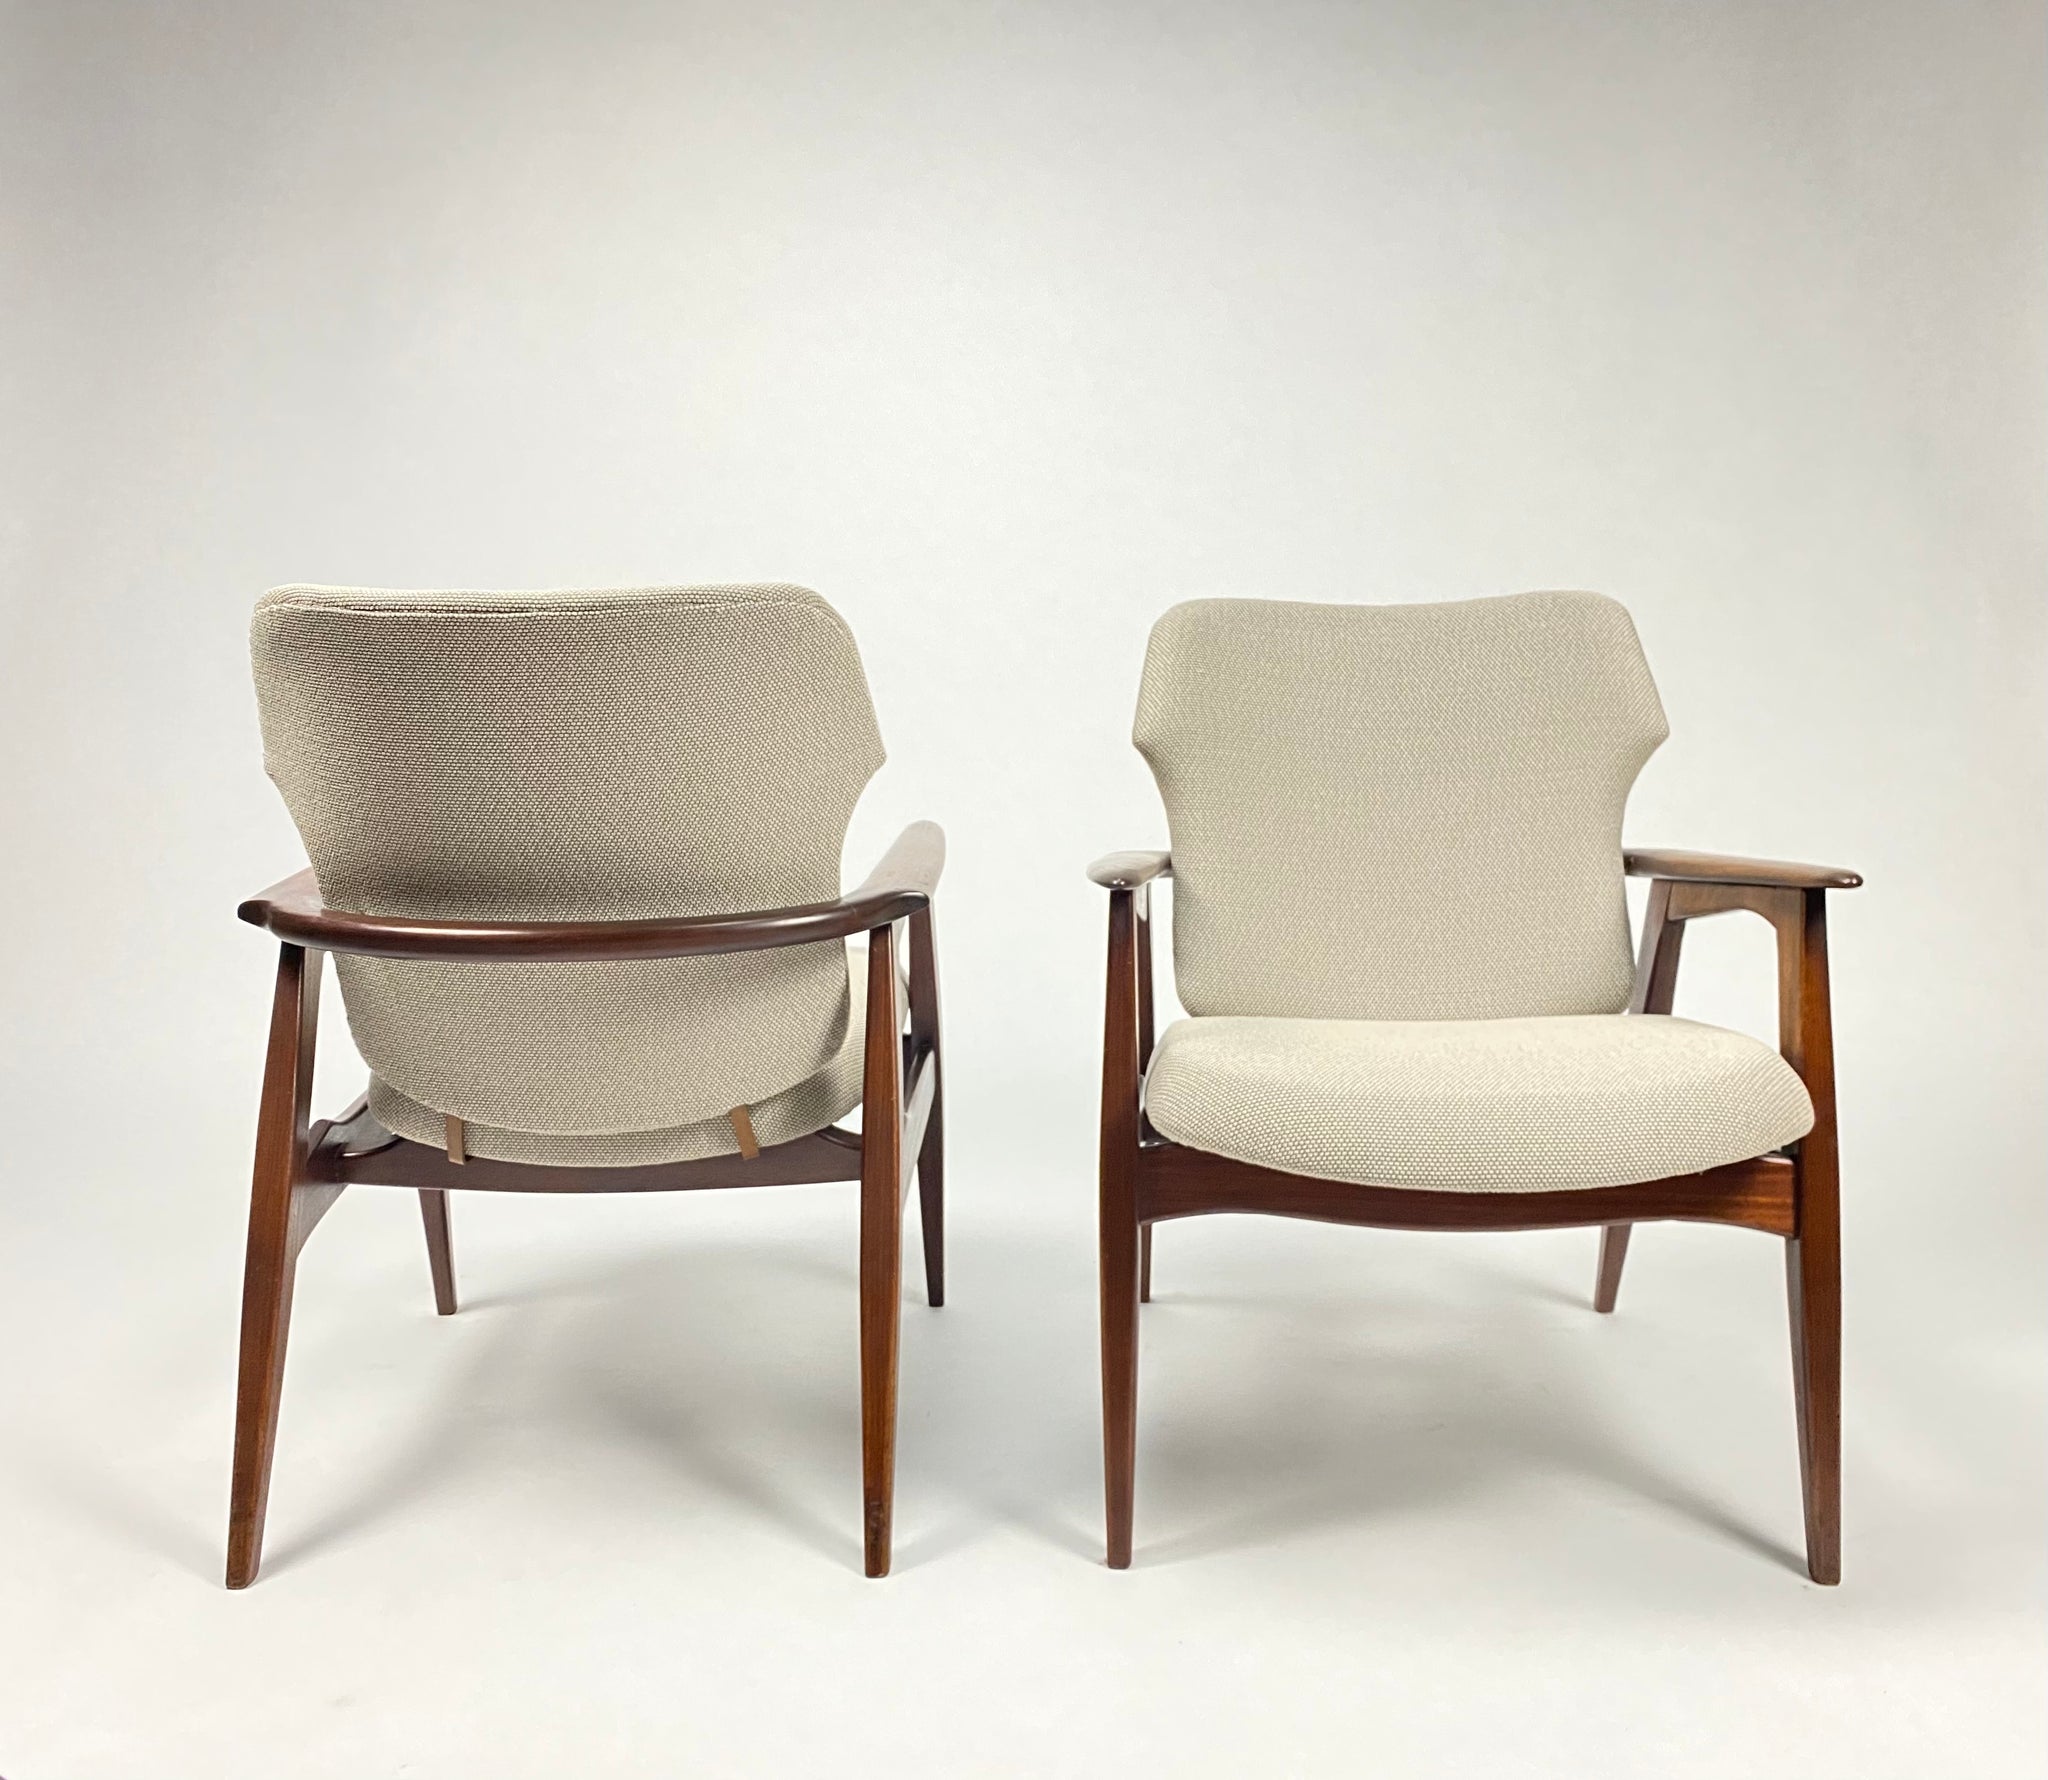 Set of Louis van Teeffelen Tolga chairs